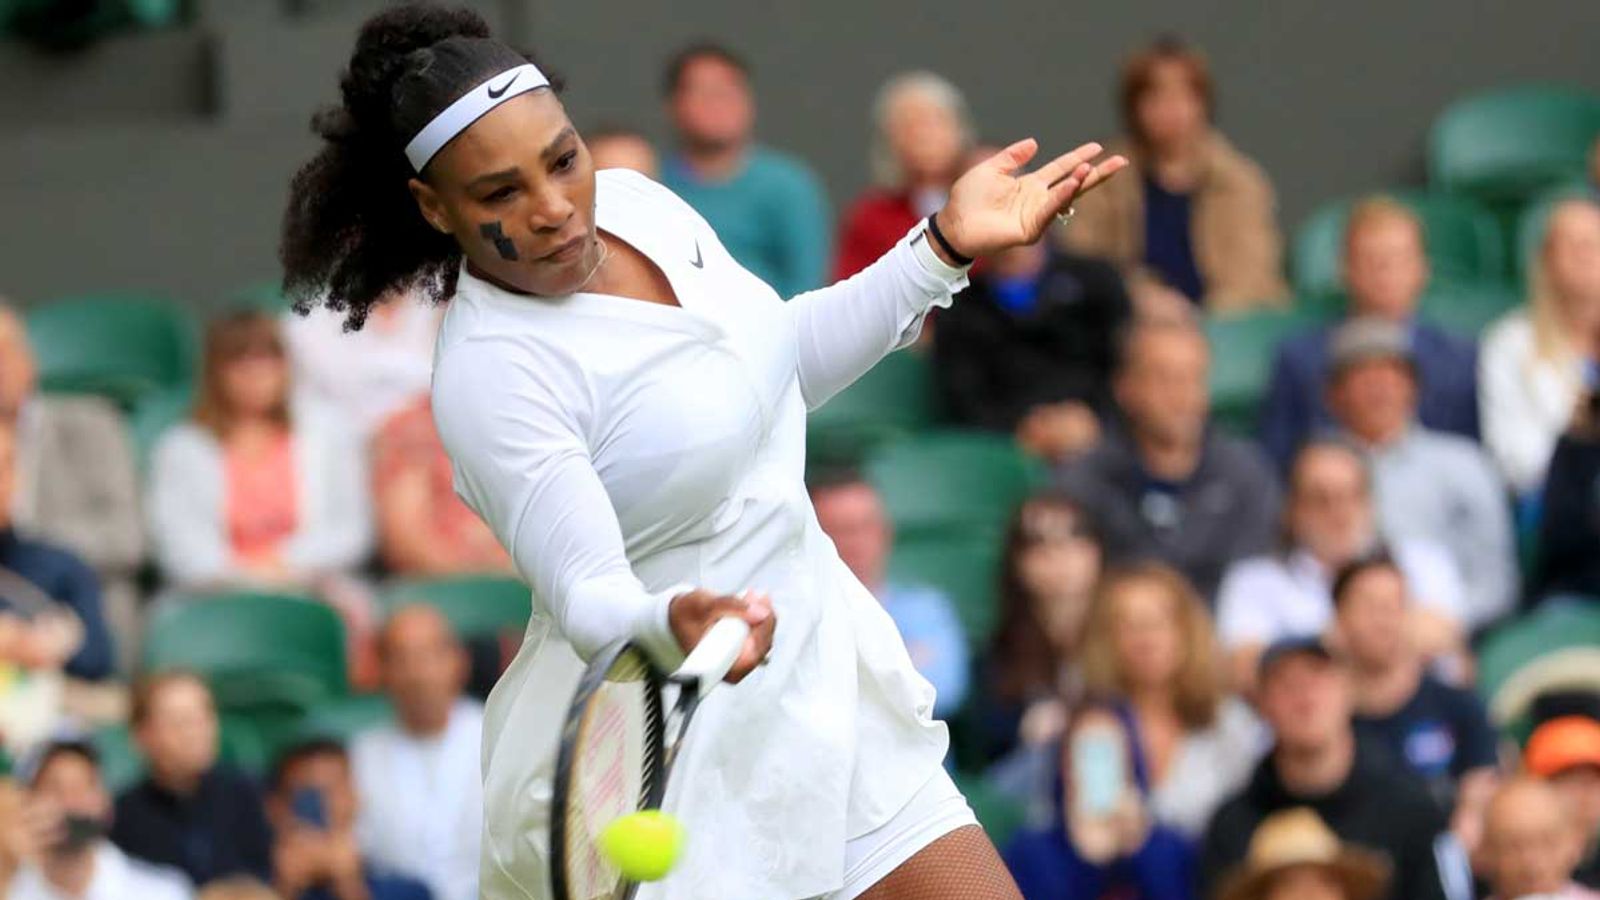 Tennis Serena Williams spielt WTA-Turnier in Toronto Tennis News Sky Sport